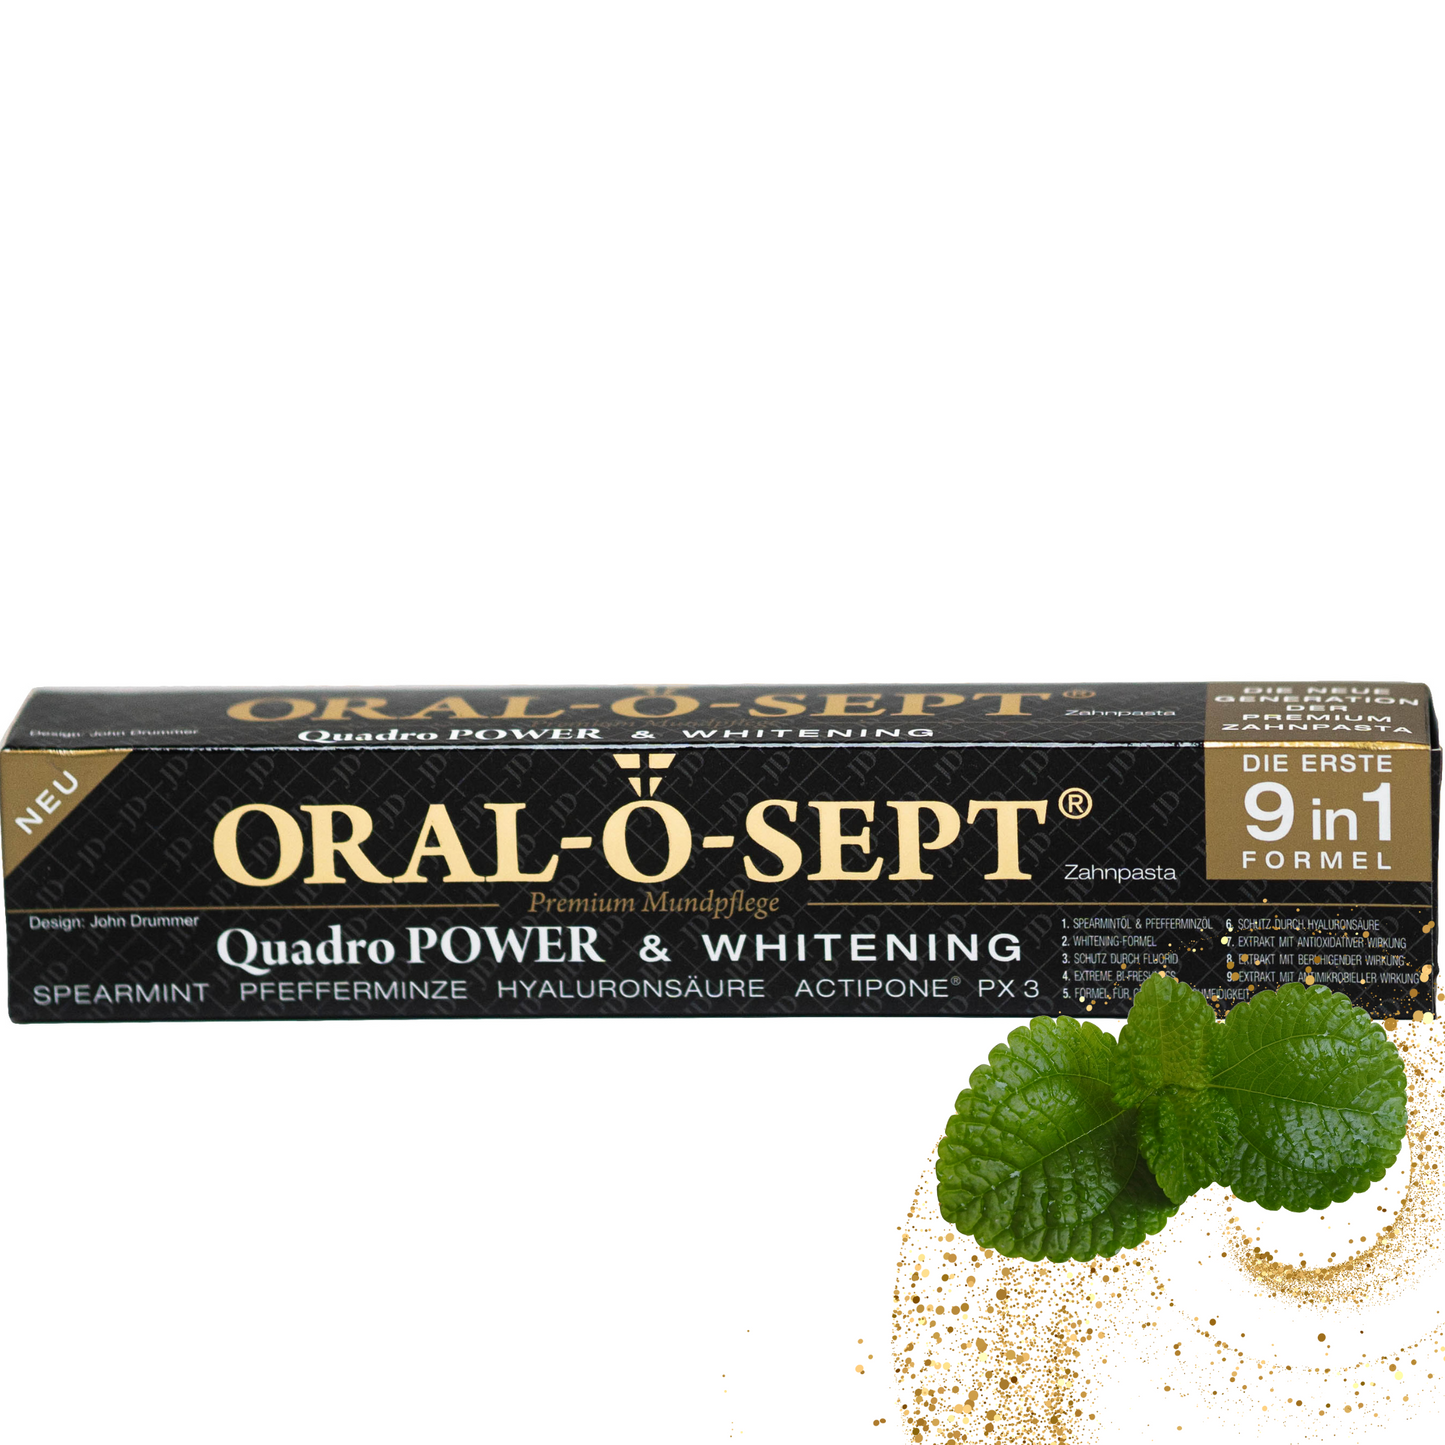 ORAL-O-SEPT Premium Toothpaste Quadro POWER & WHITENING (Pack of 3+1 GRATIS)